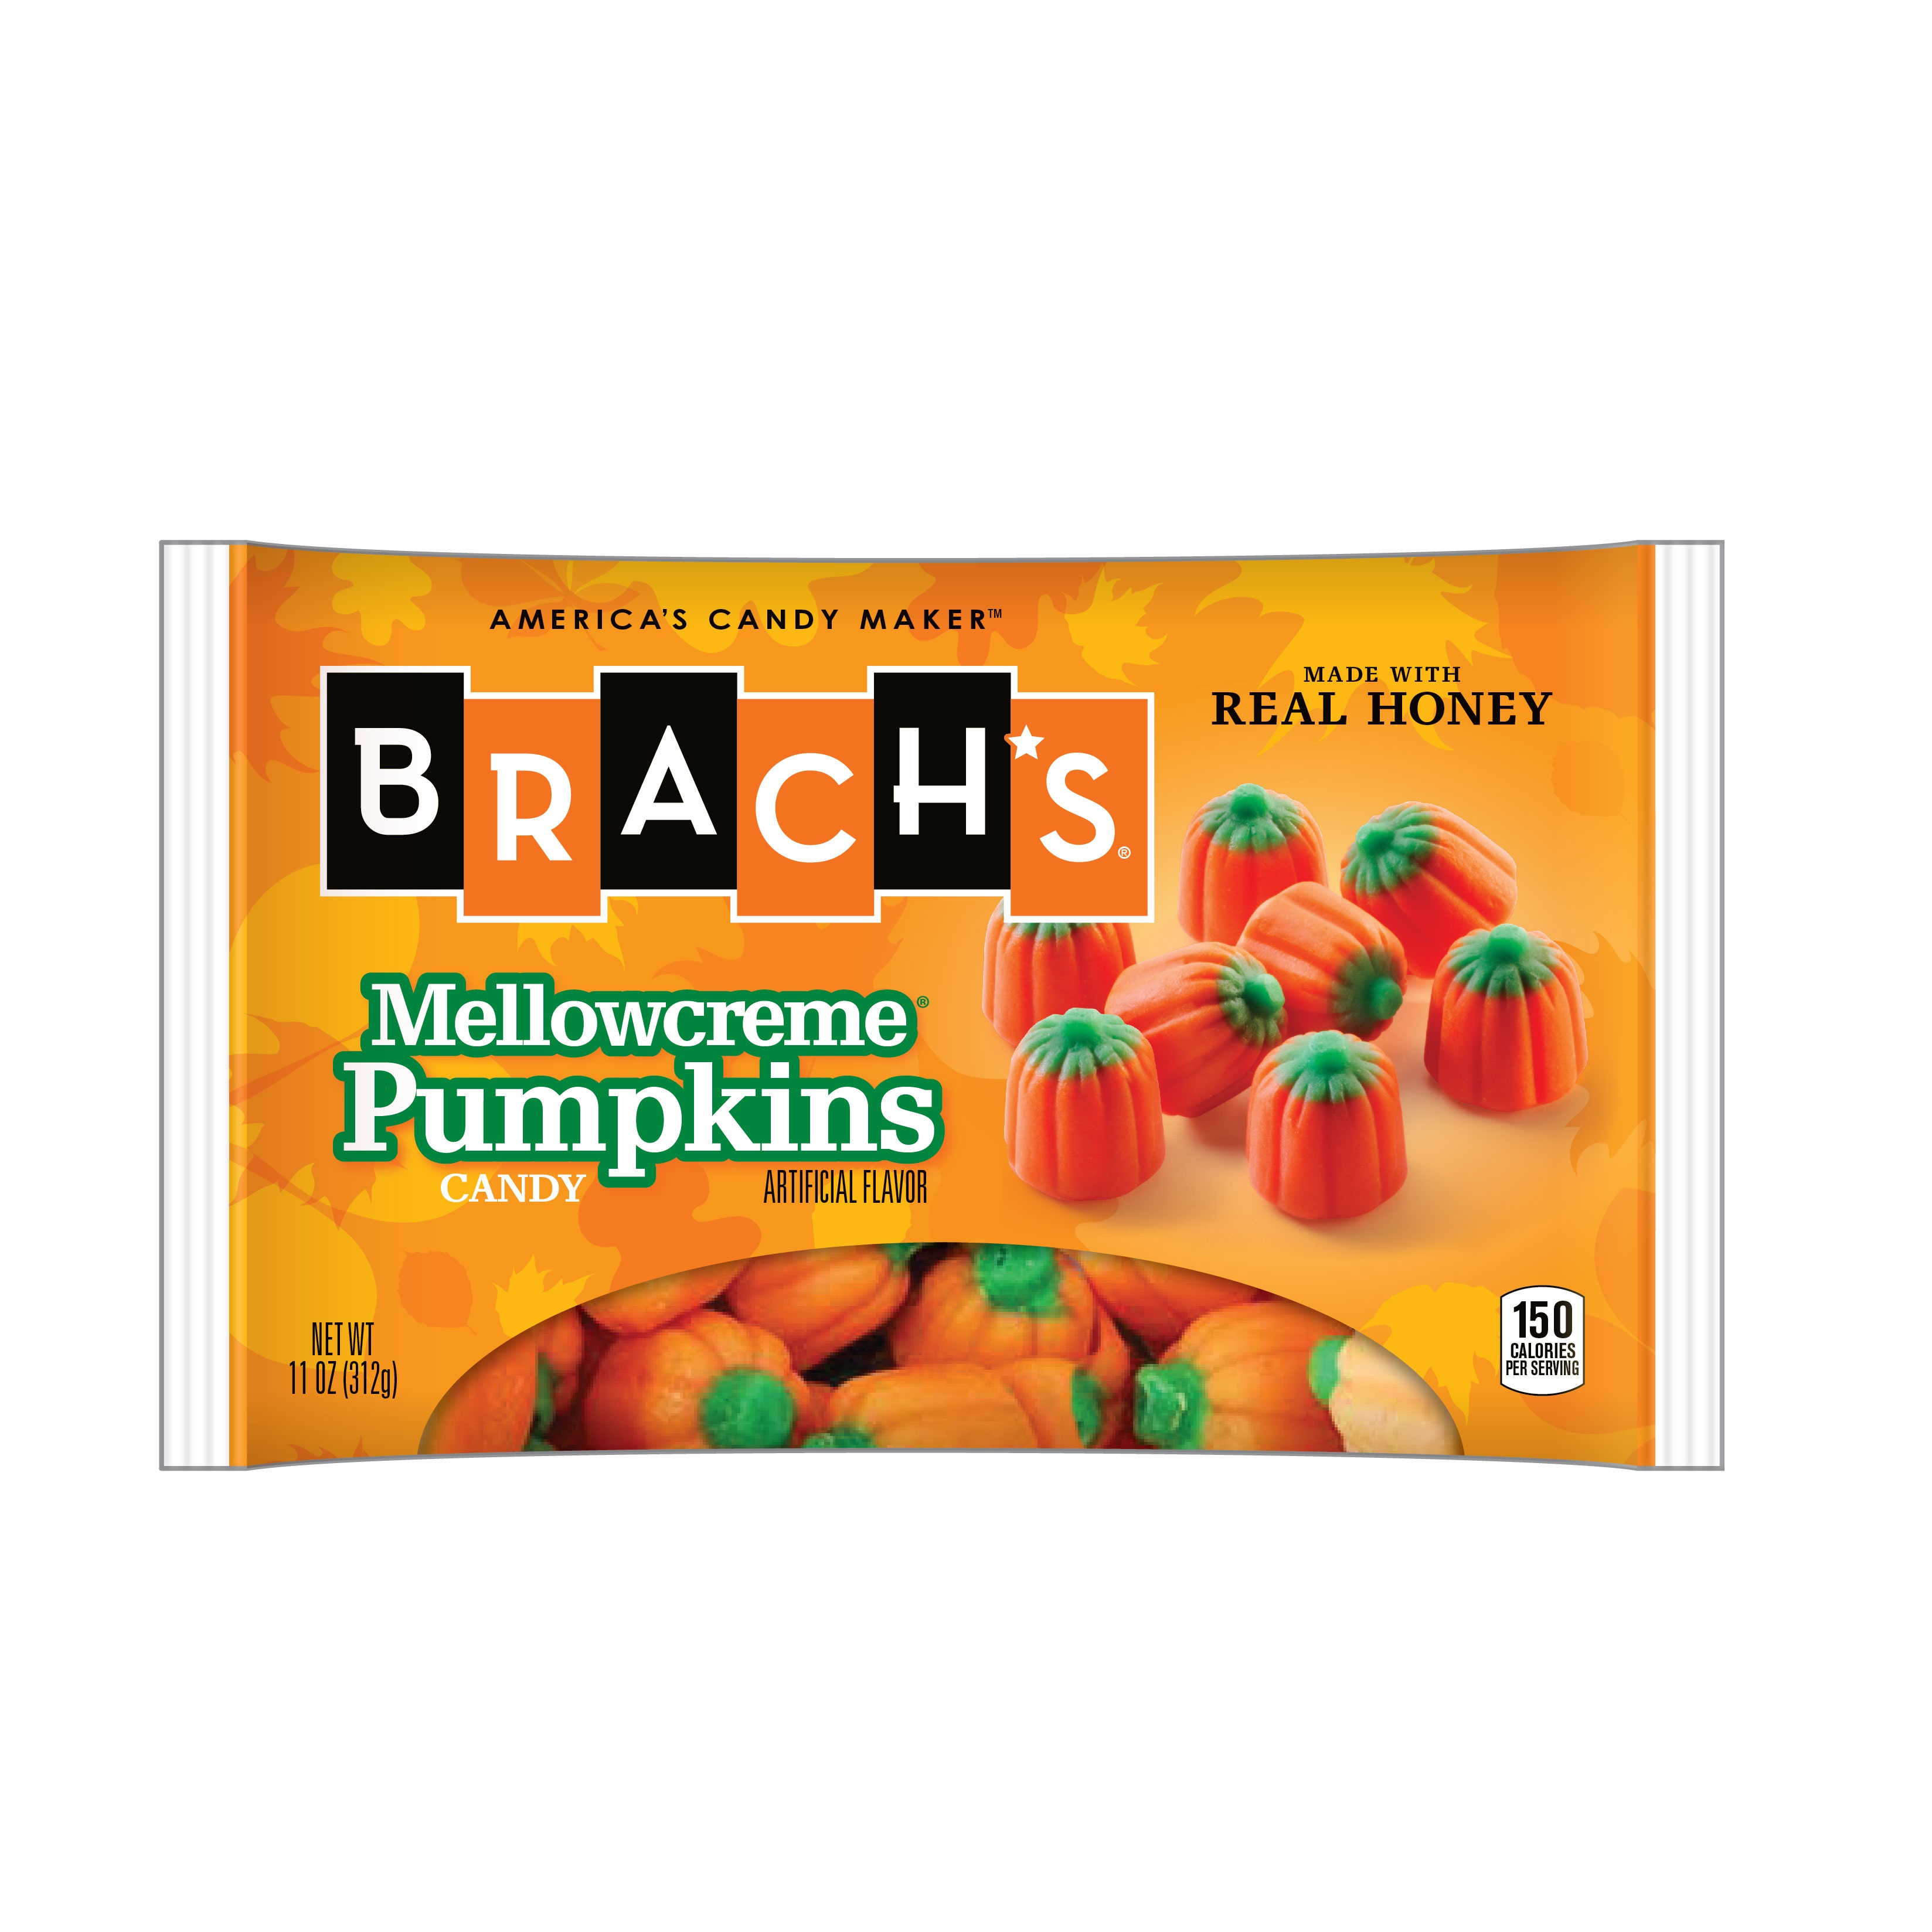 Brach's Mellowcreme Pumpkins Candy Food Product Image